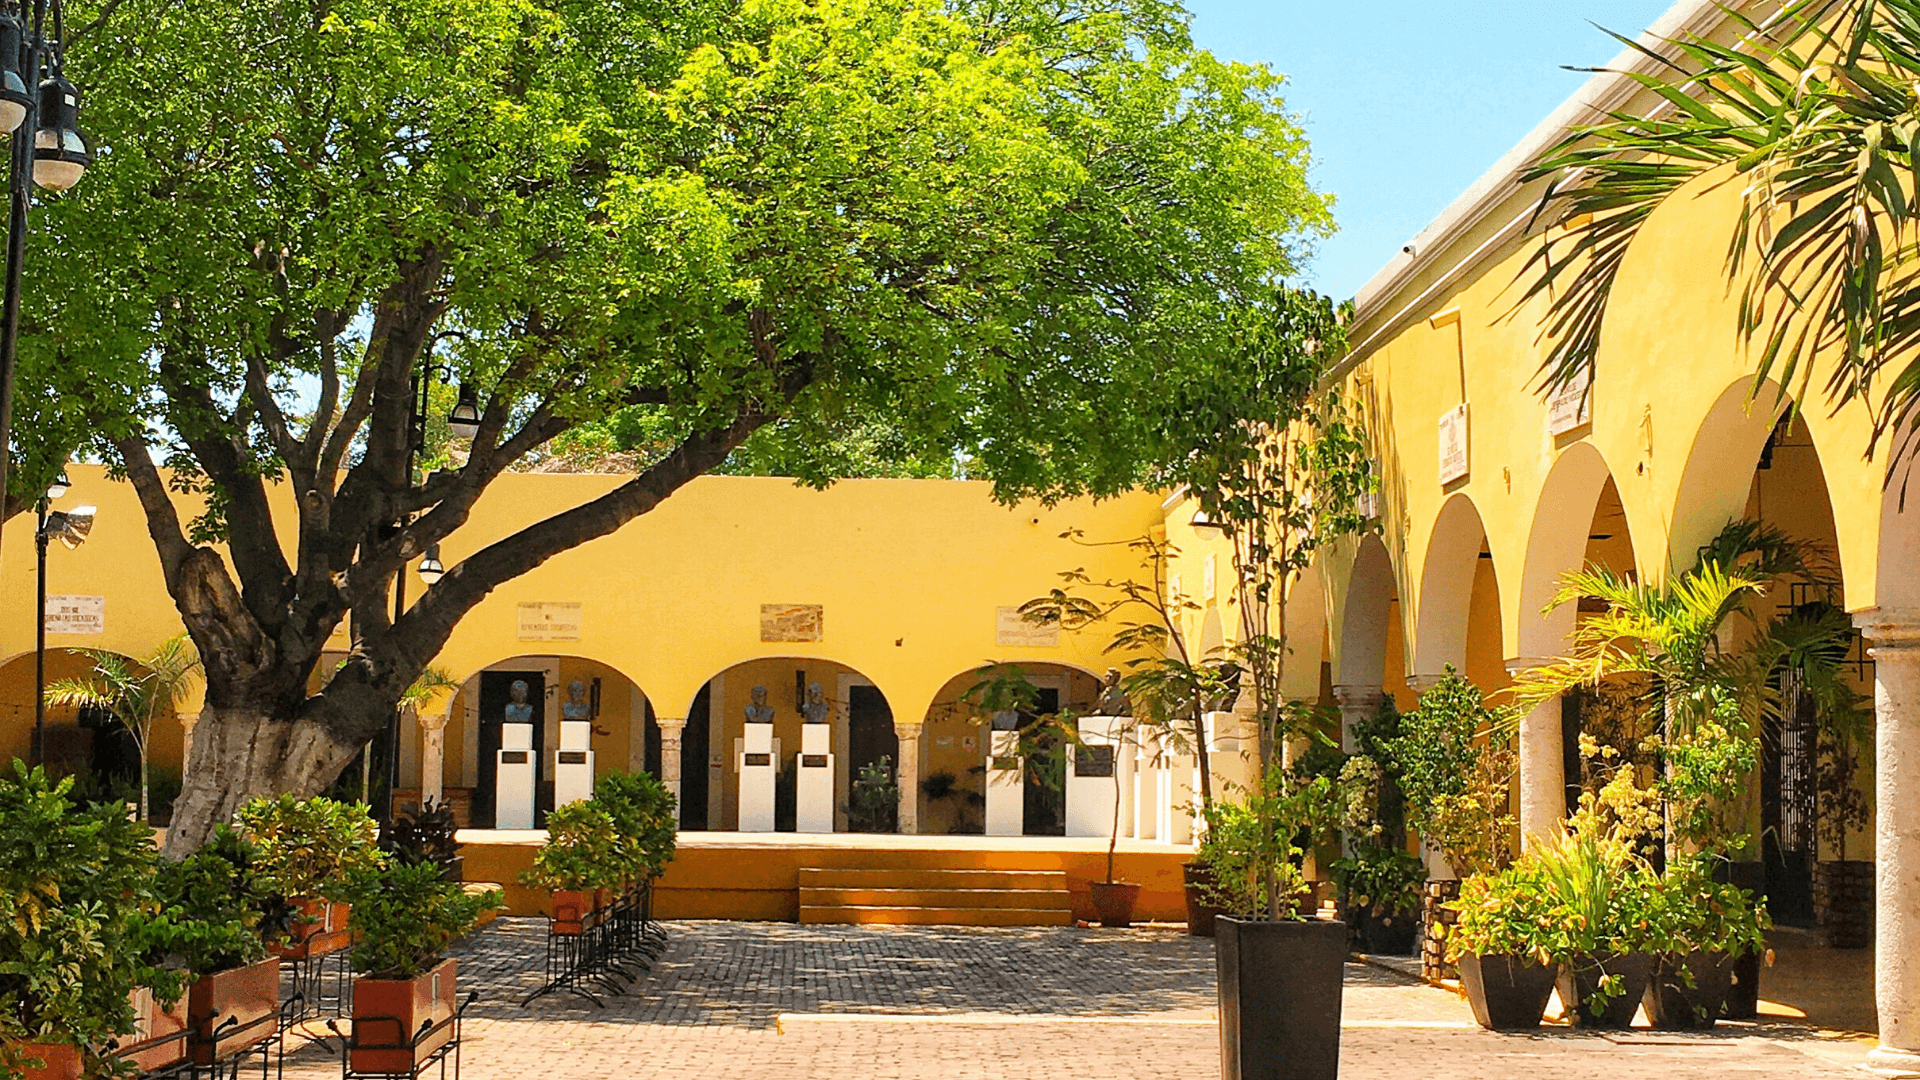 Santa Lucia park in Merida mexico